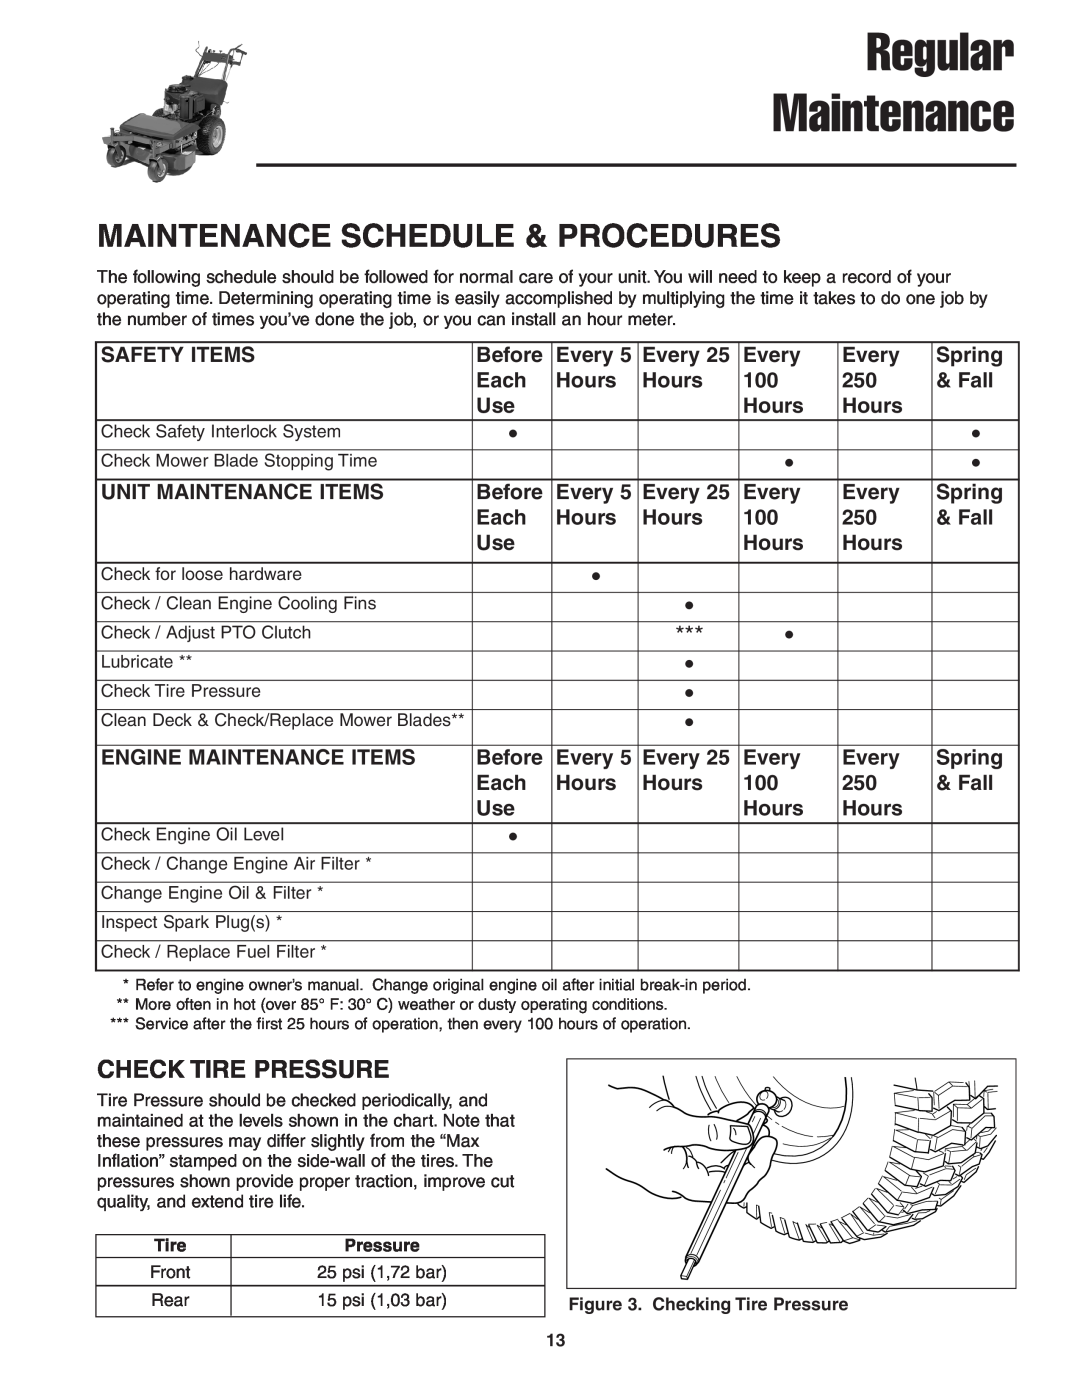 Snapper 13HP manual Regular Maintenance, Maintenance Schedule & Procedures, Check Tire Pressure 